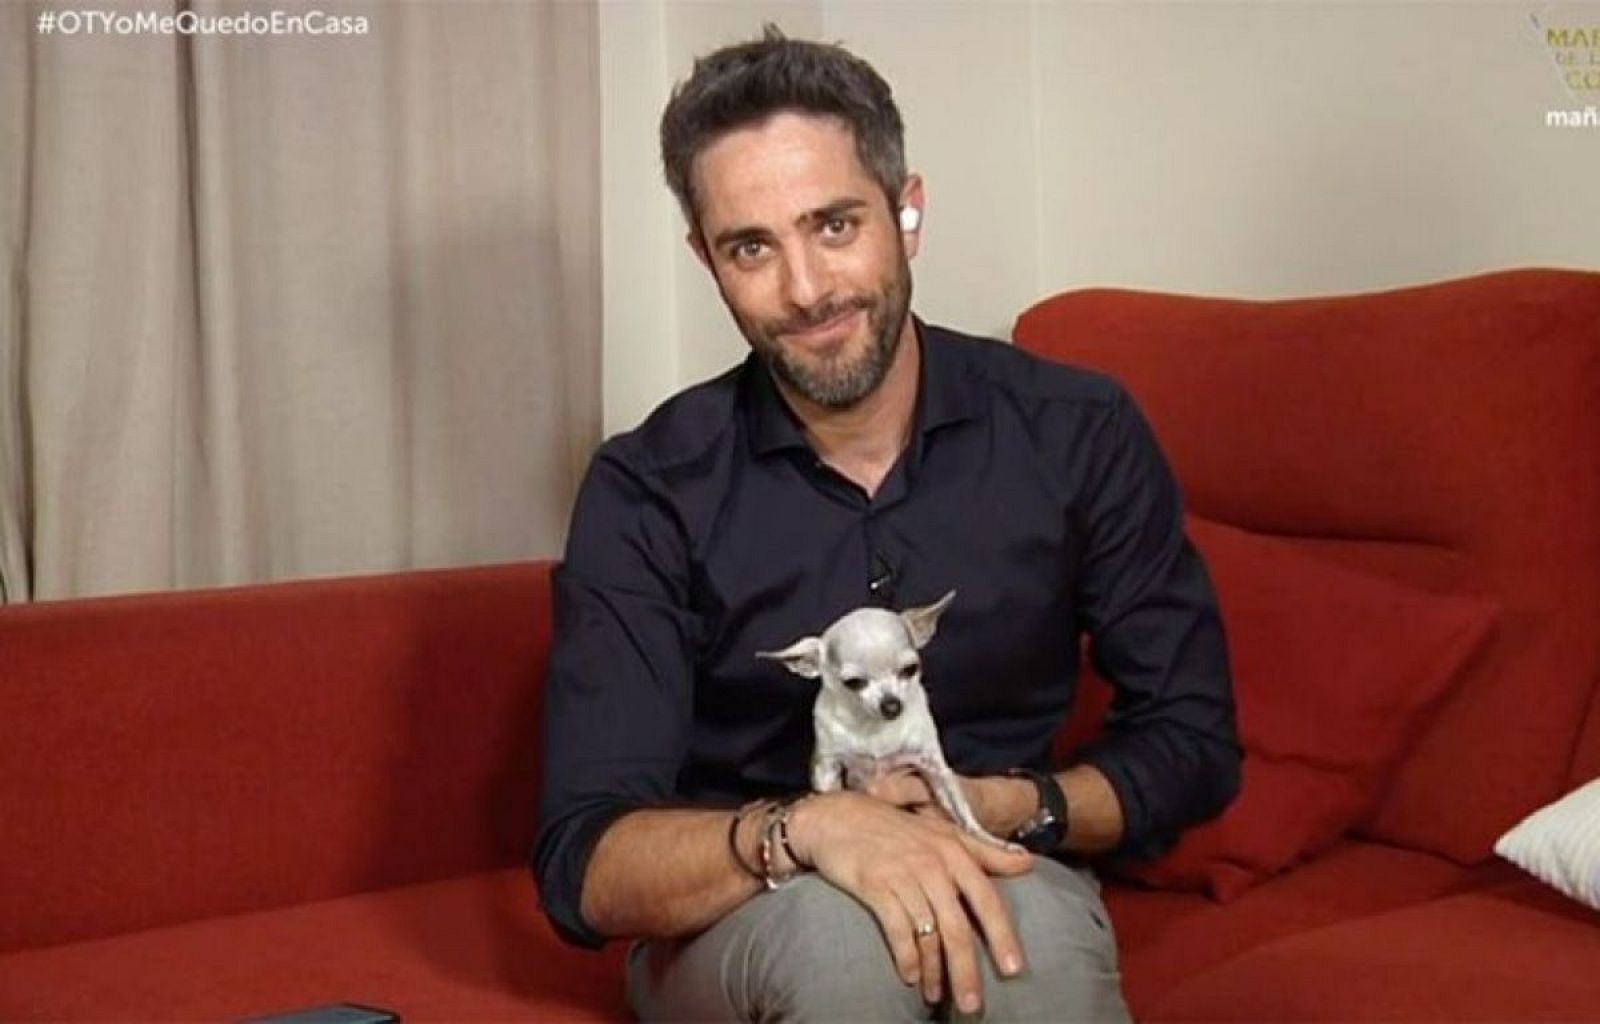 Roberto Leal con su perra La Pepa presentando OT desde casa